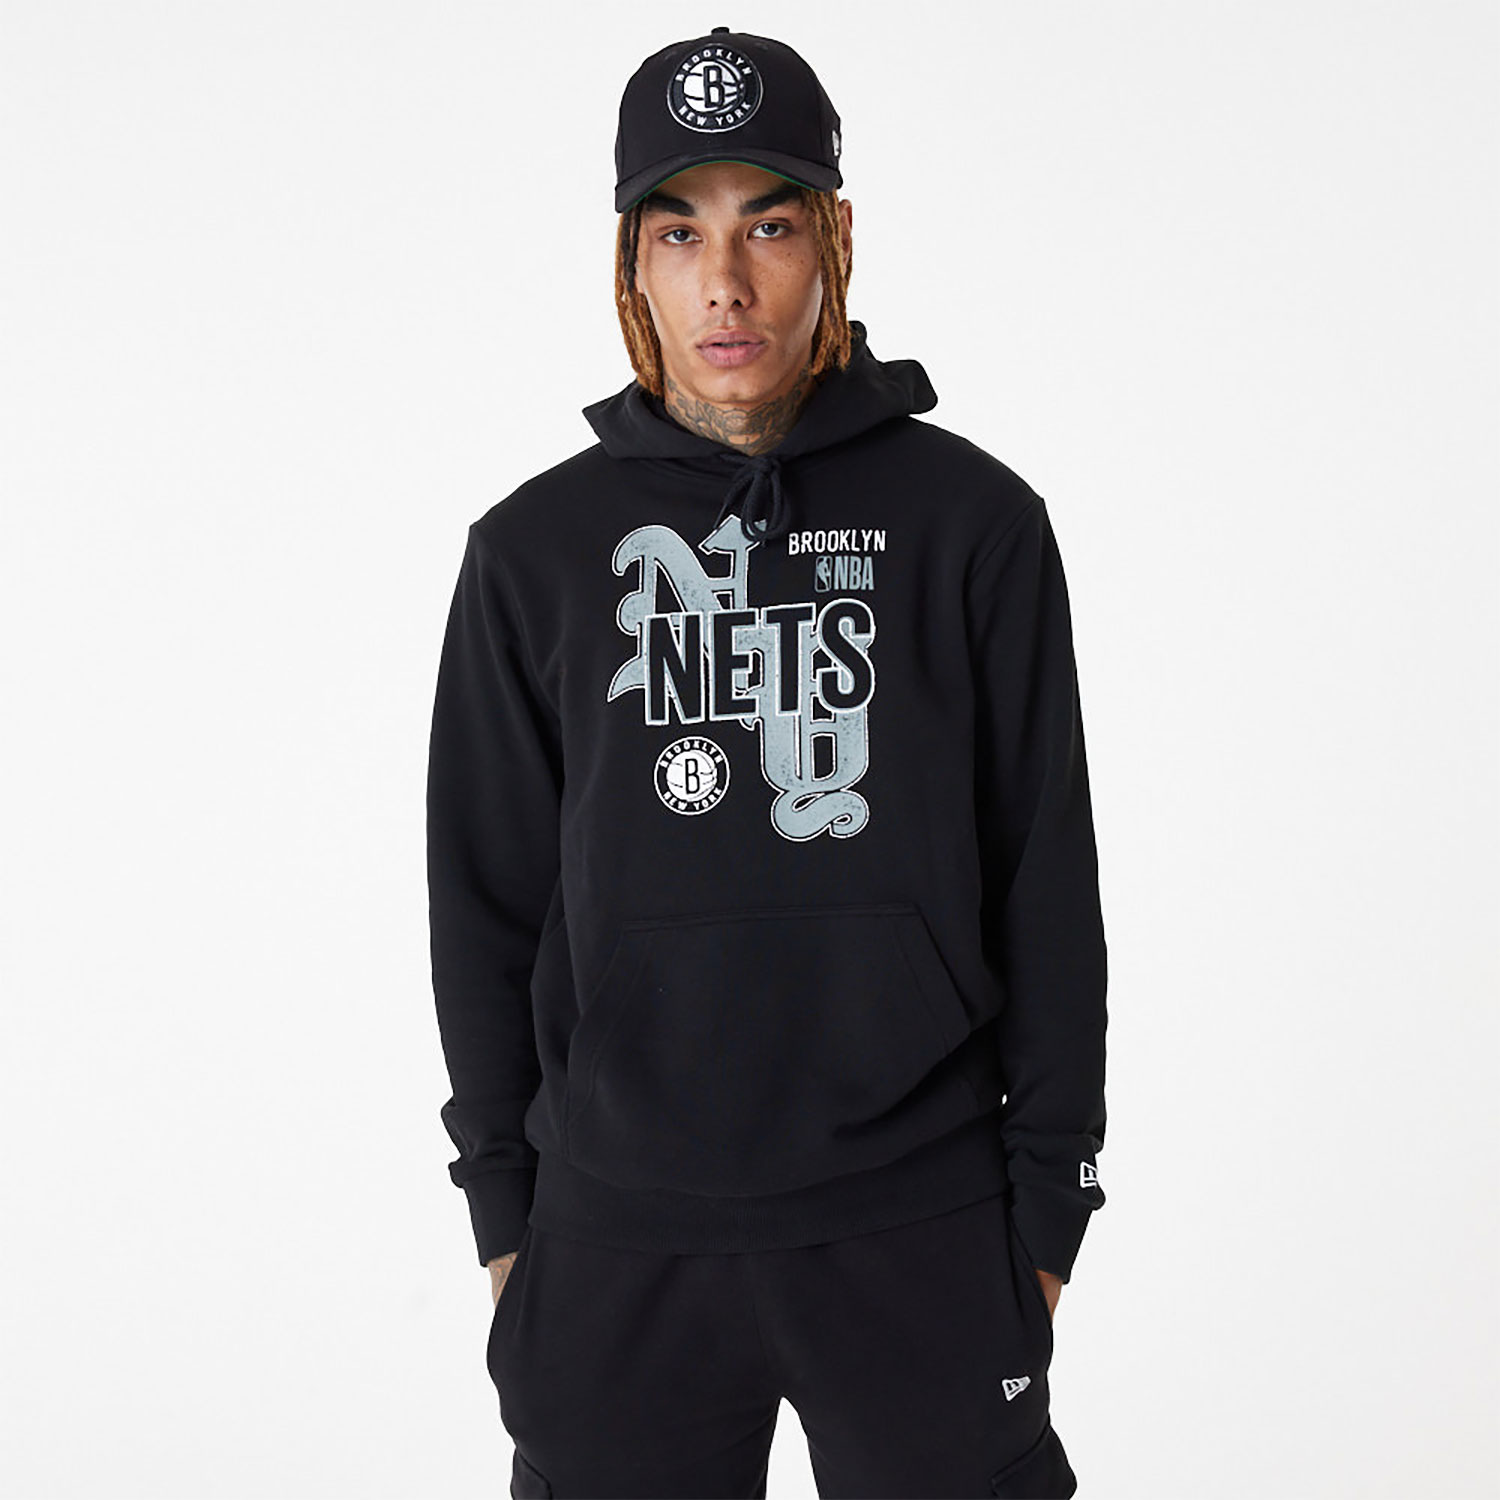 Brooklyn Nets NBA Team Graphic Black Pullover Hoodie